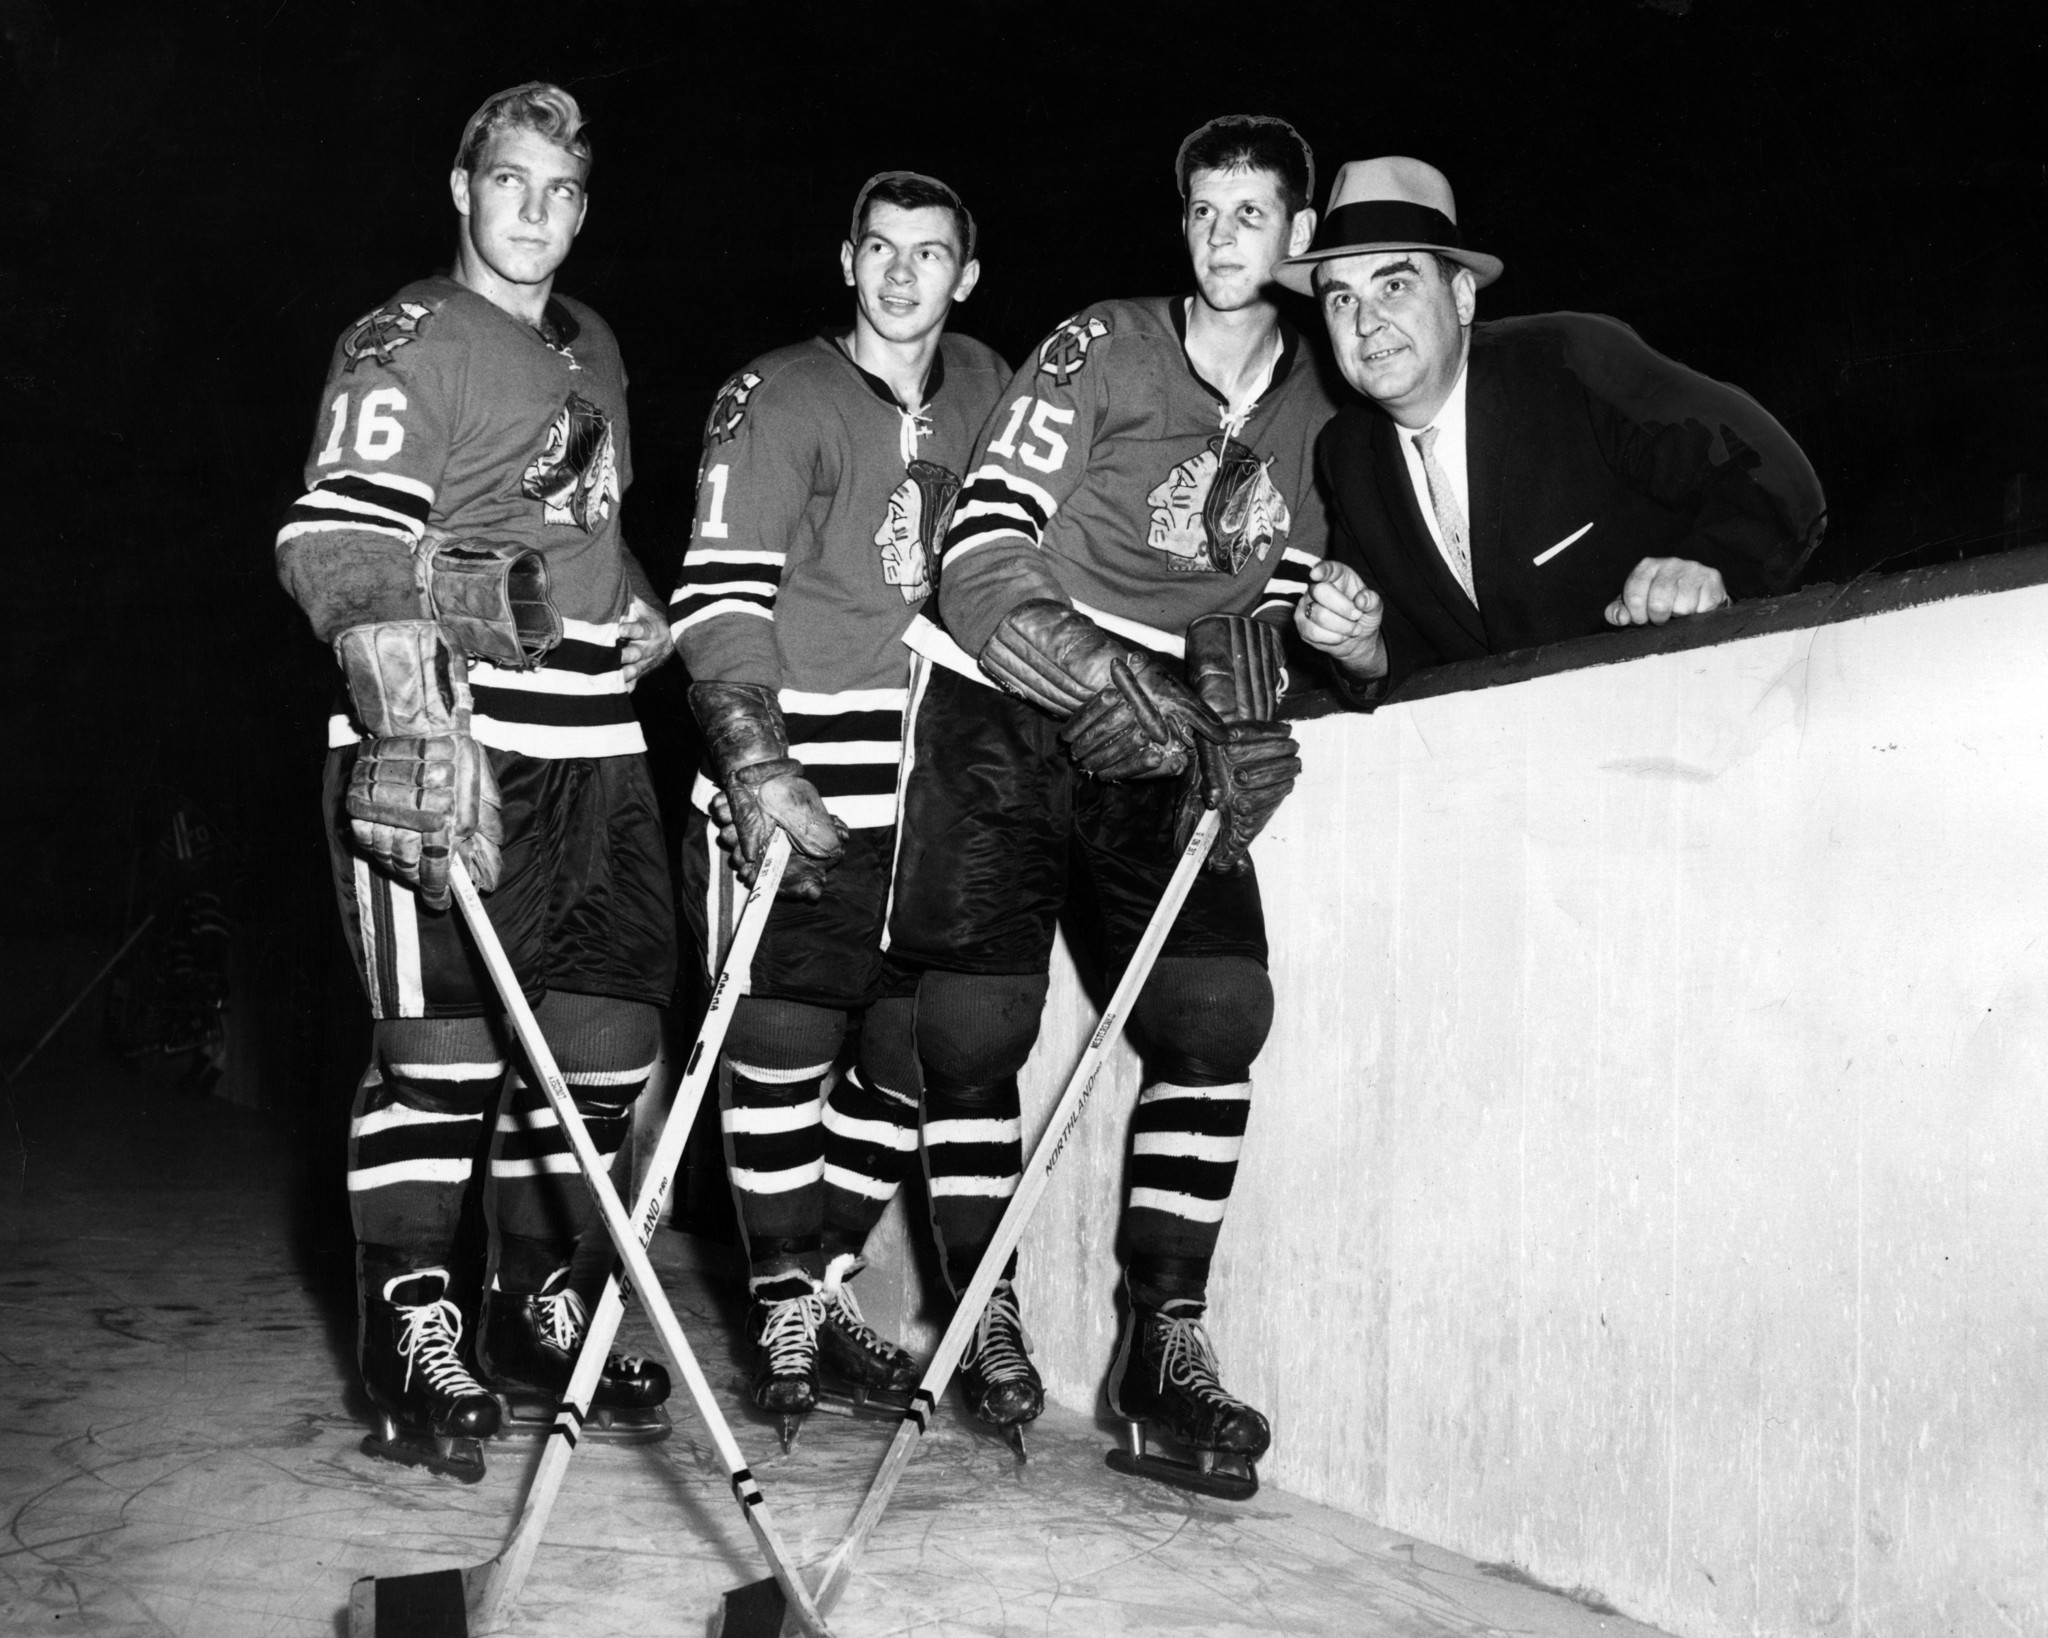 1965 Vintage Photo Chicago Black Hawks Hockey Player Doug Jarrett uniform  posing